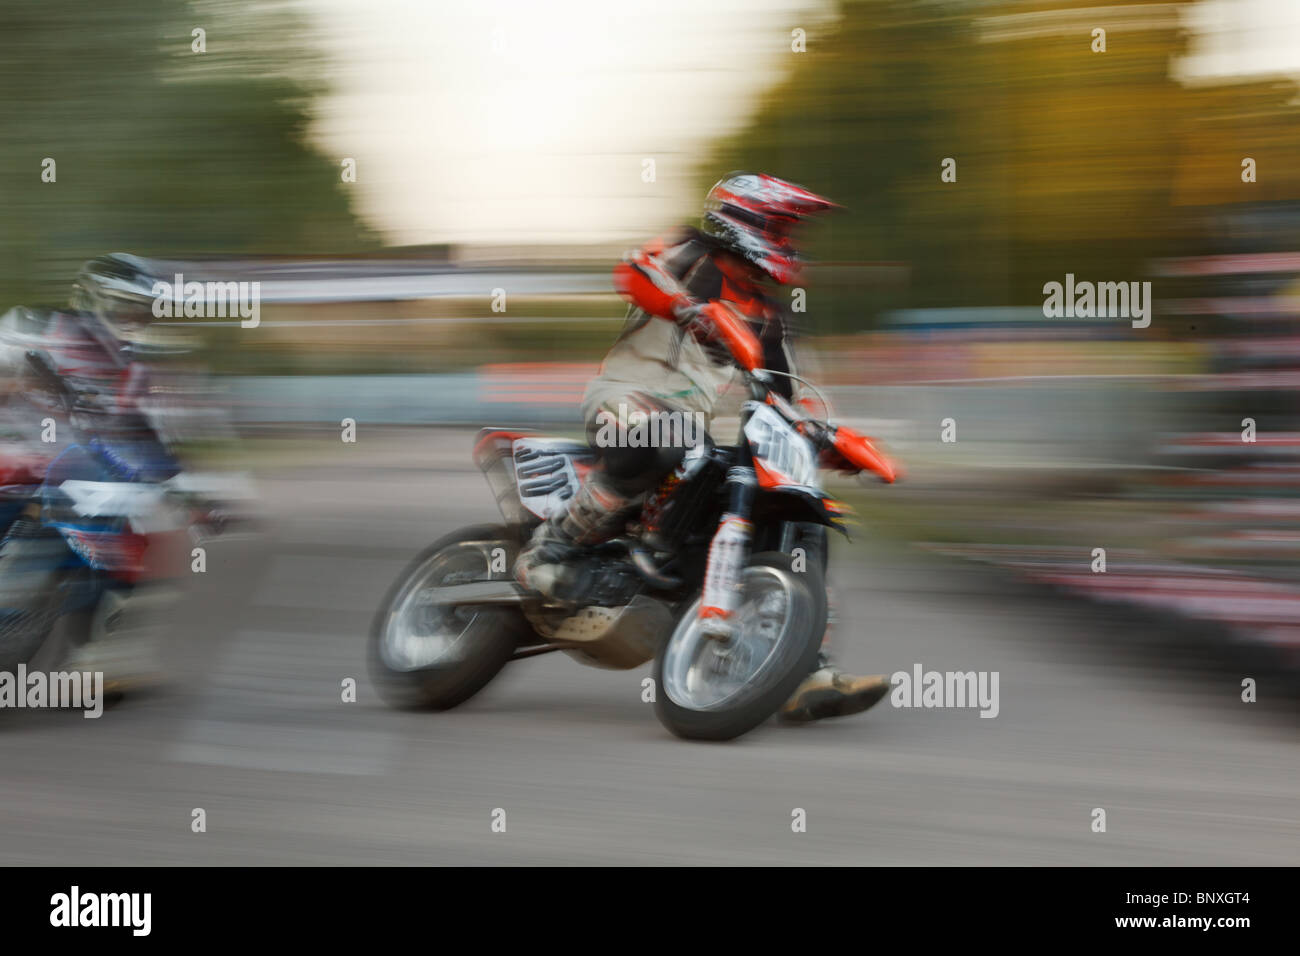 Motorbike riding, speed blurred motion Stock Photo